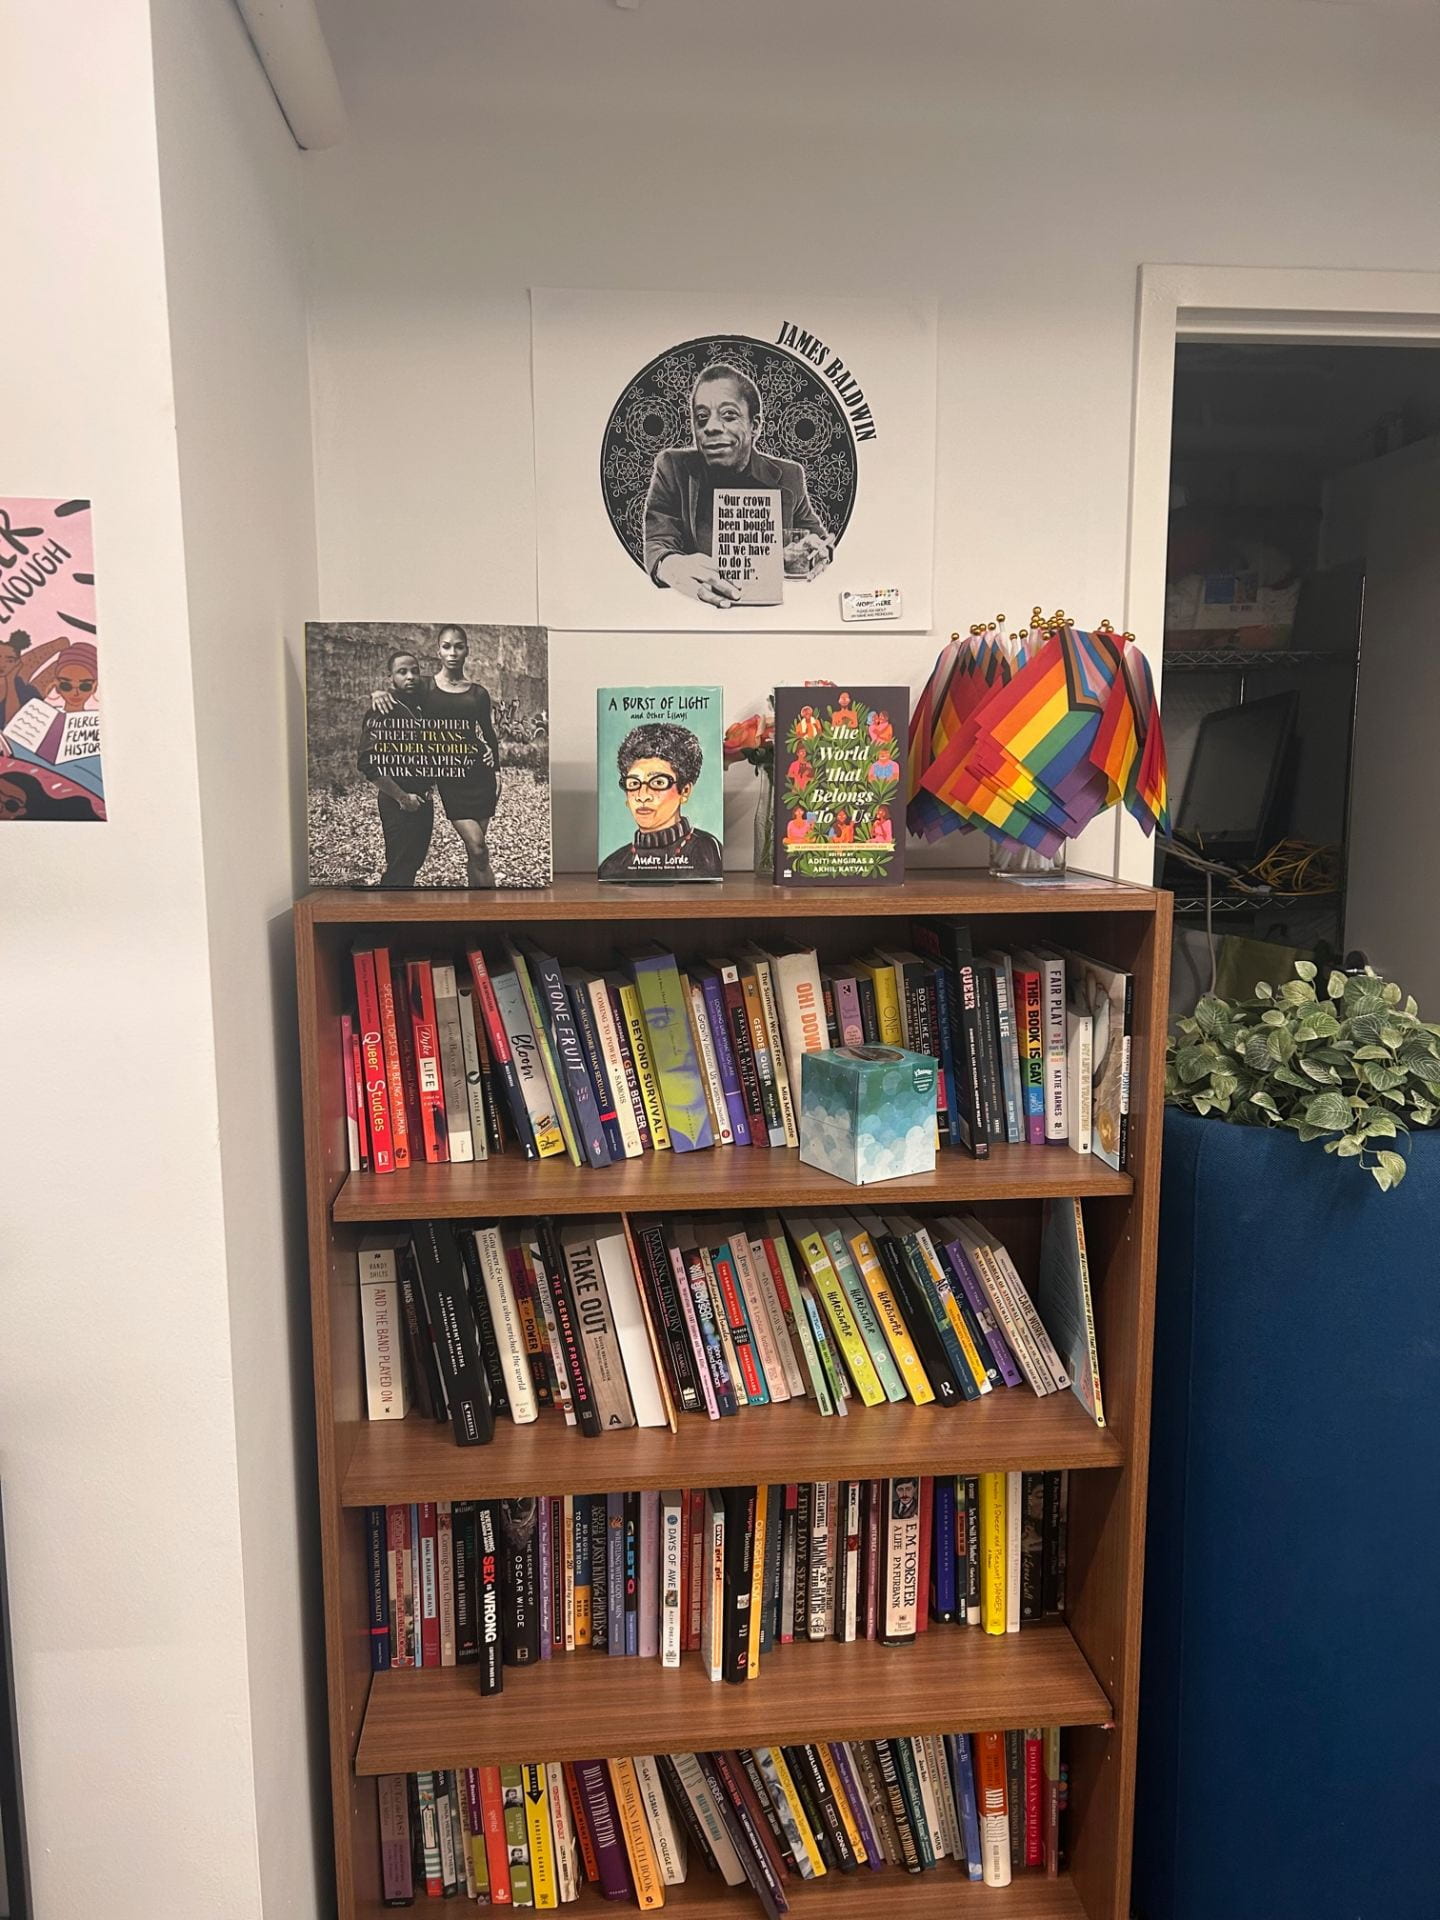 Image of bookshelf with queer literature.